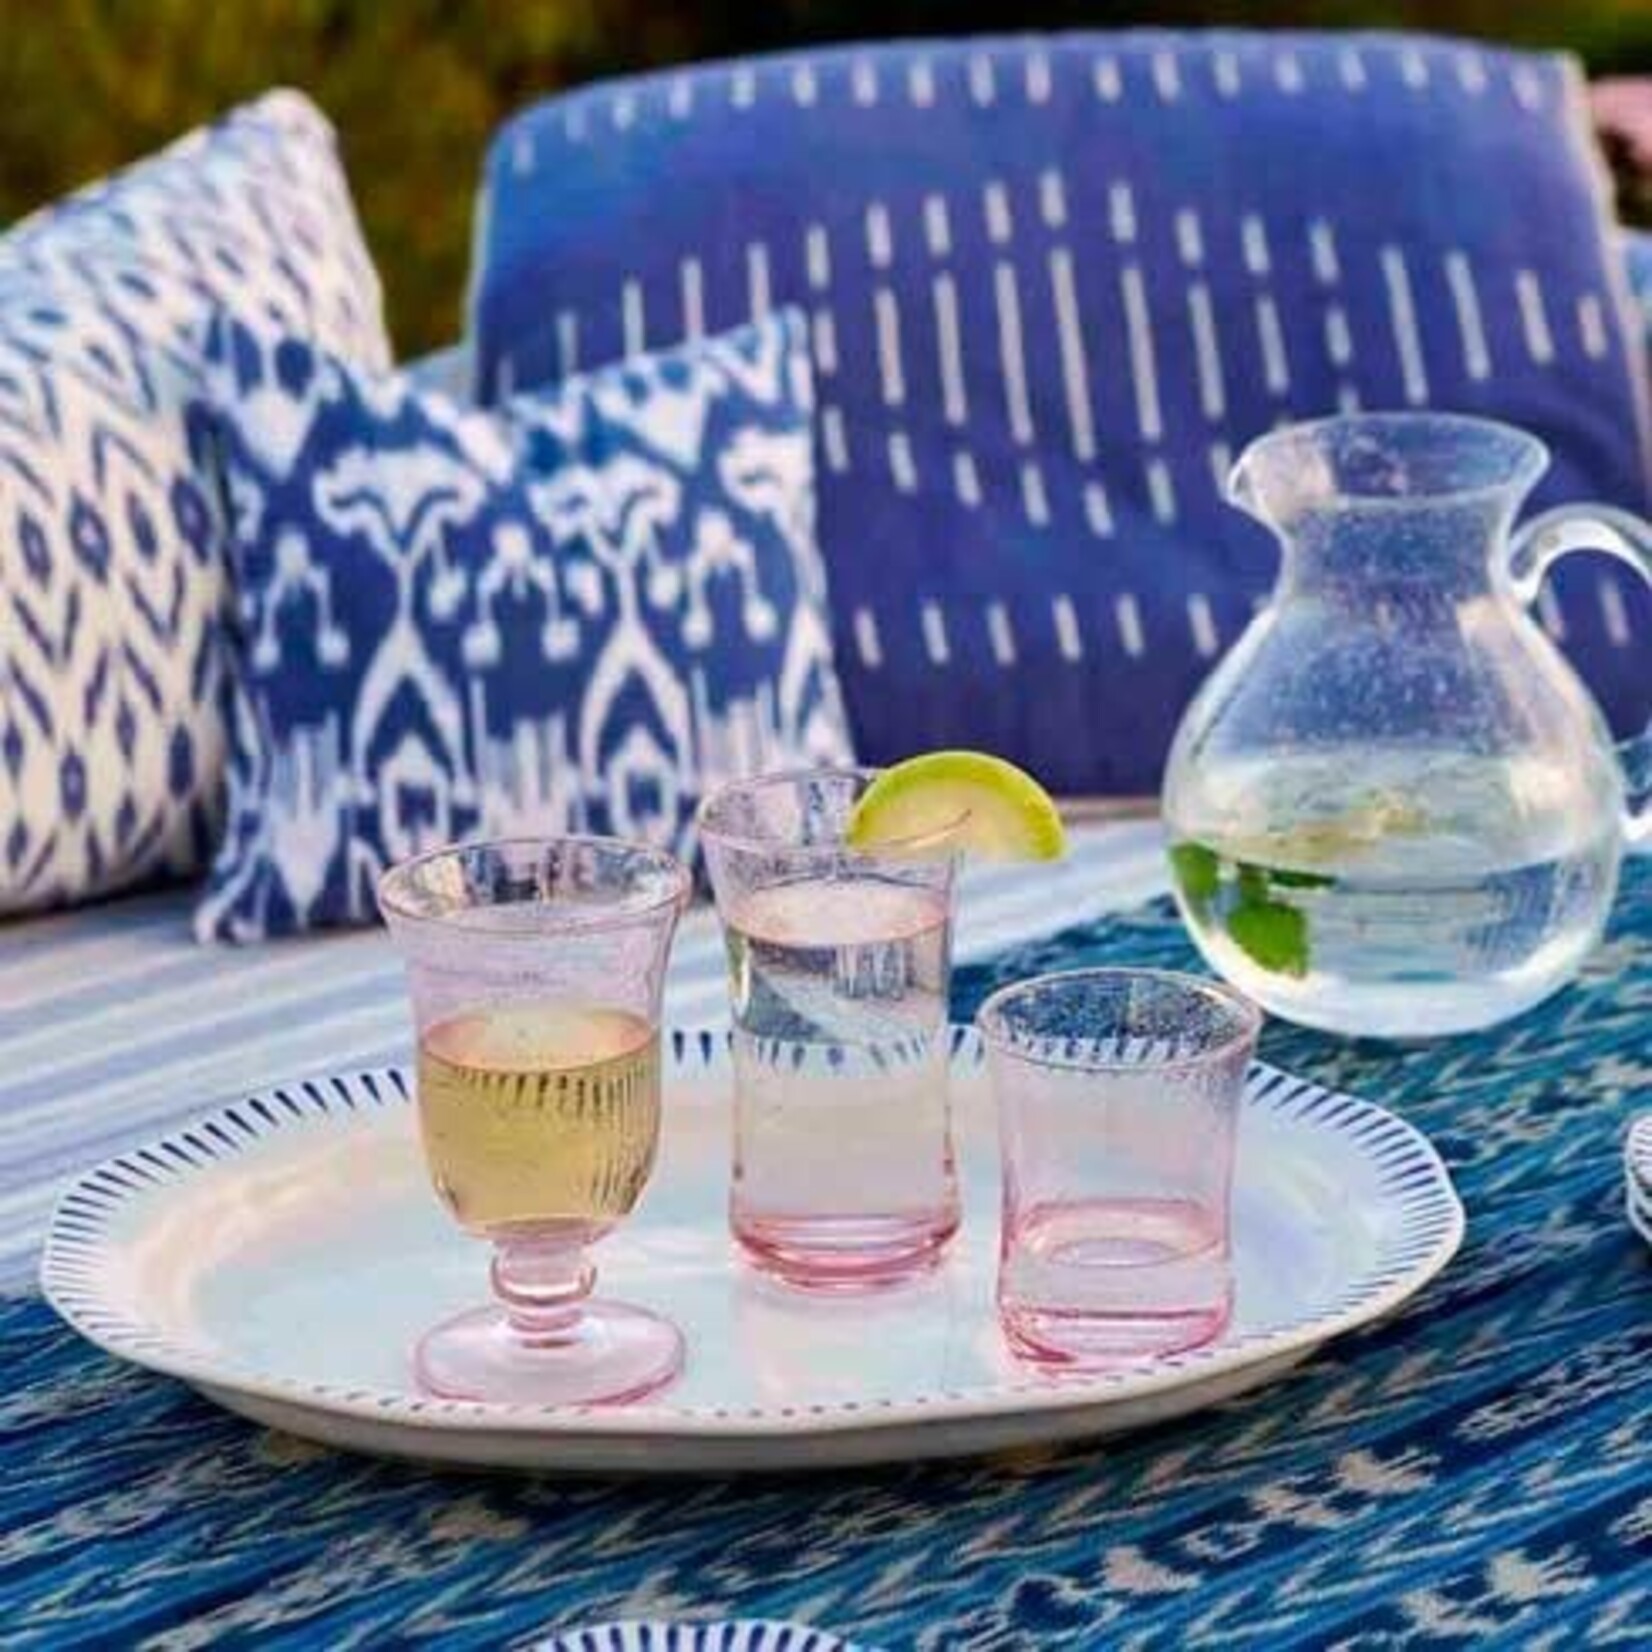 Juliska Provence Glass Goblet - Blush